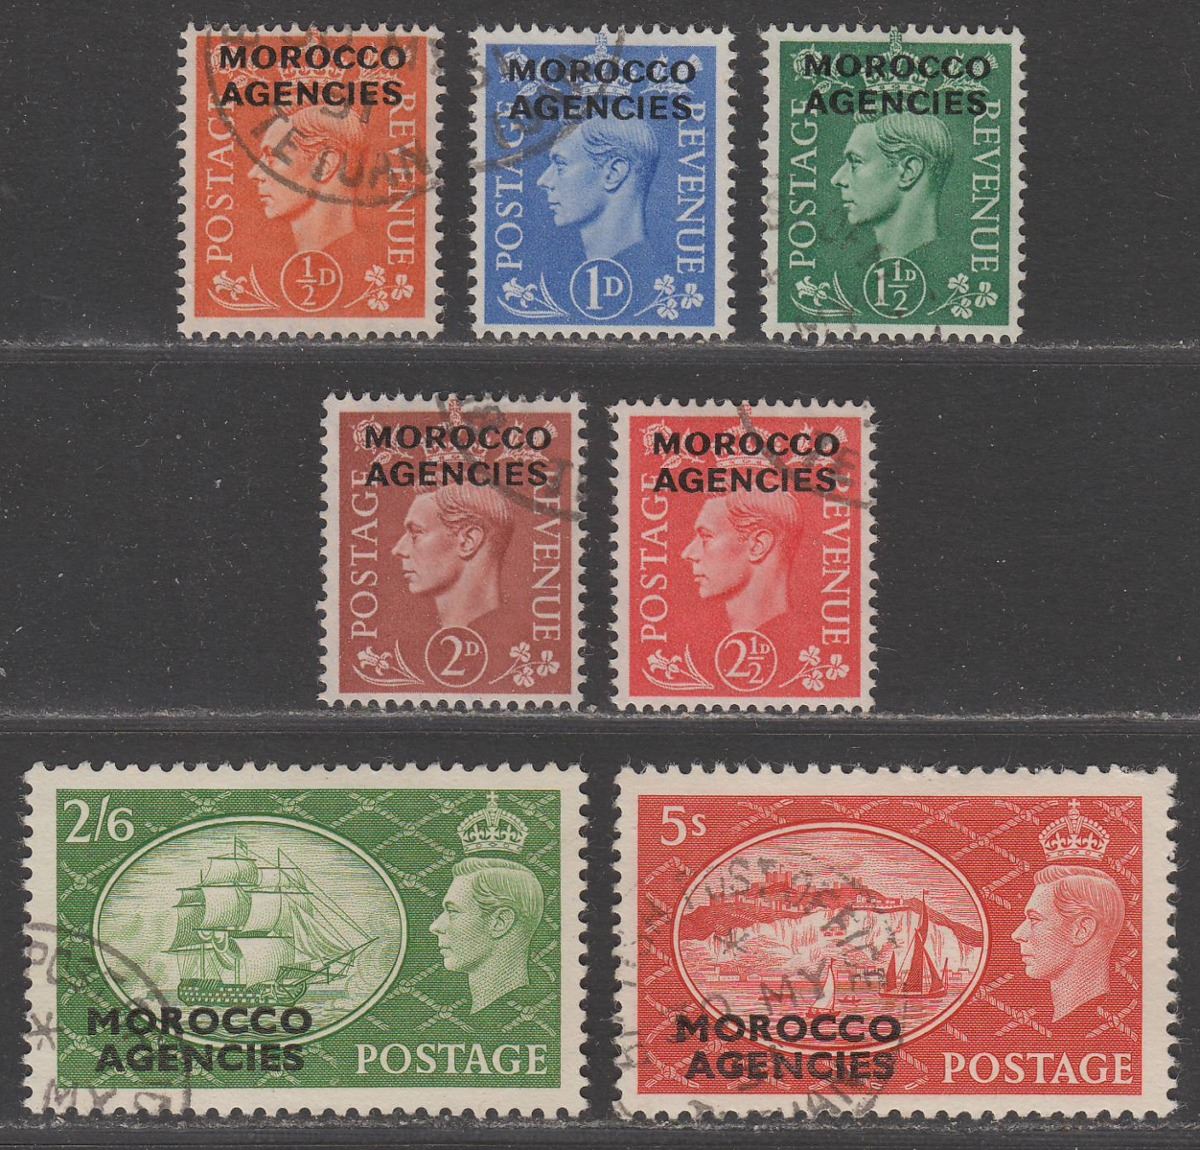 Morocco Agencies 1951 King George VI Overprint Set Used SG94-100 cat £60